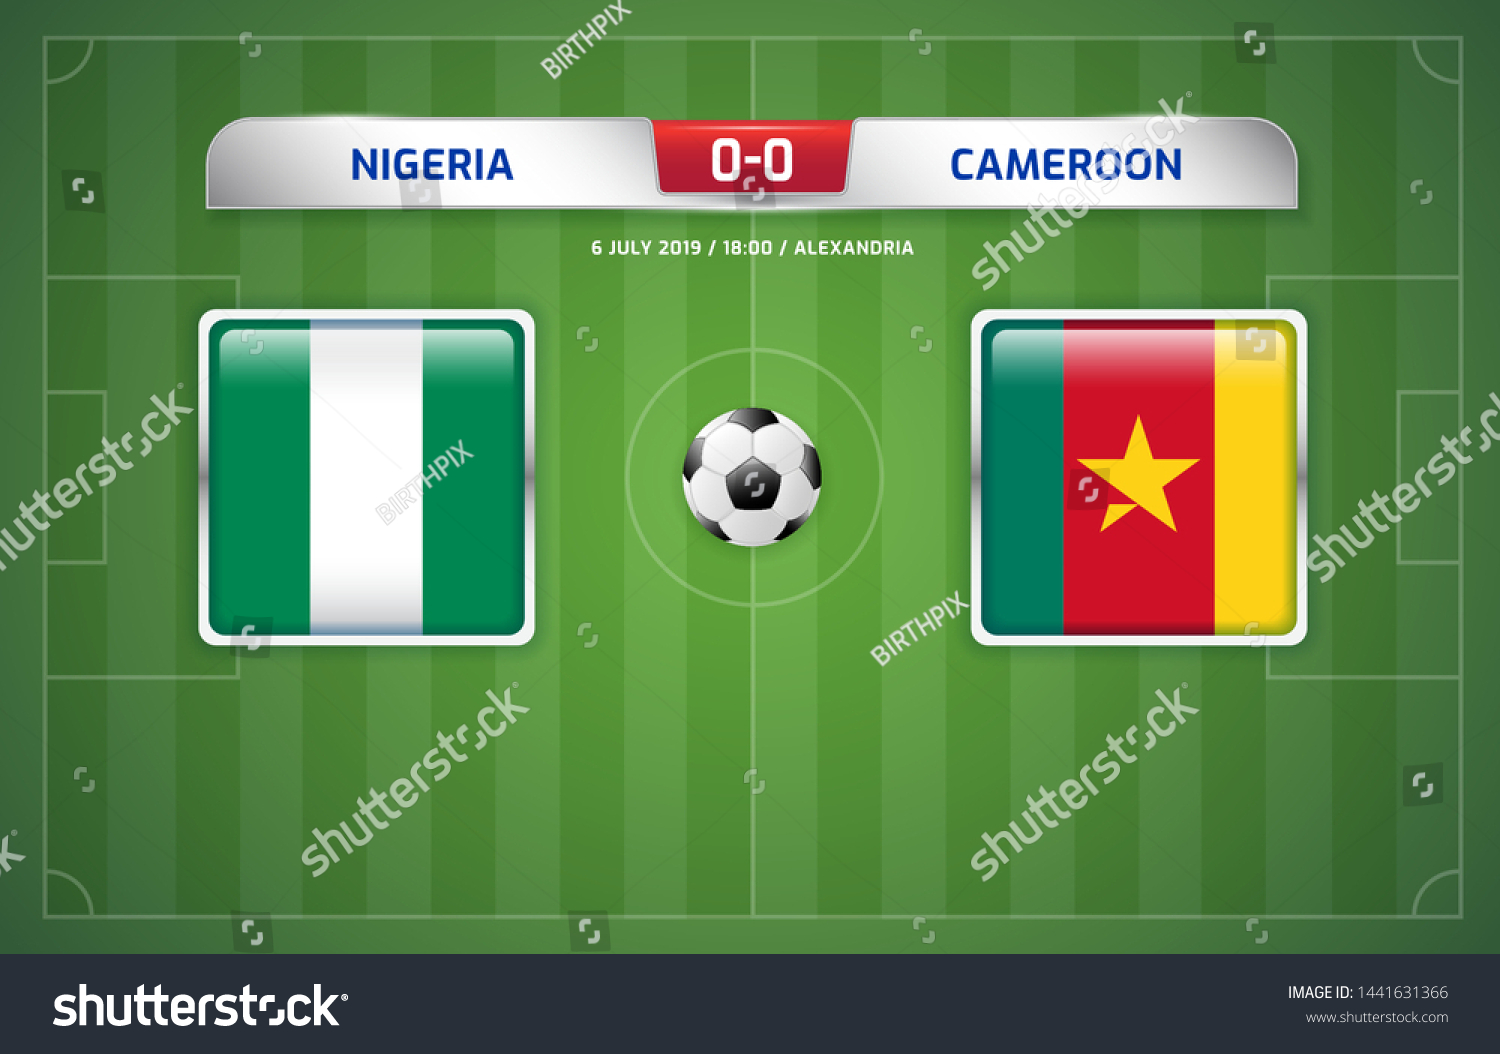 Nigeria vs cameroon